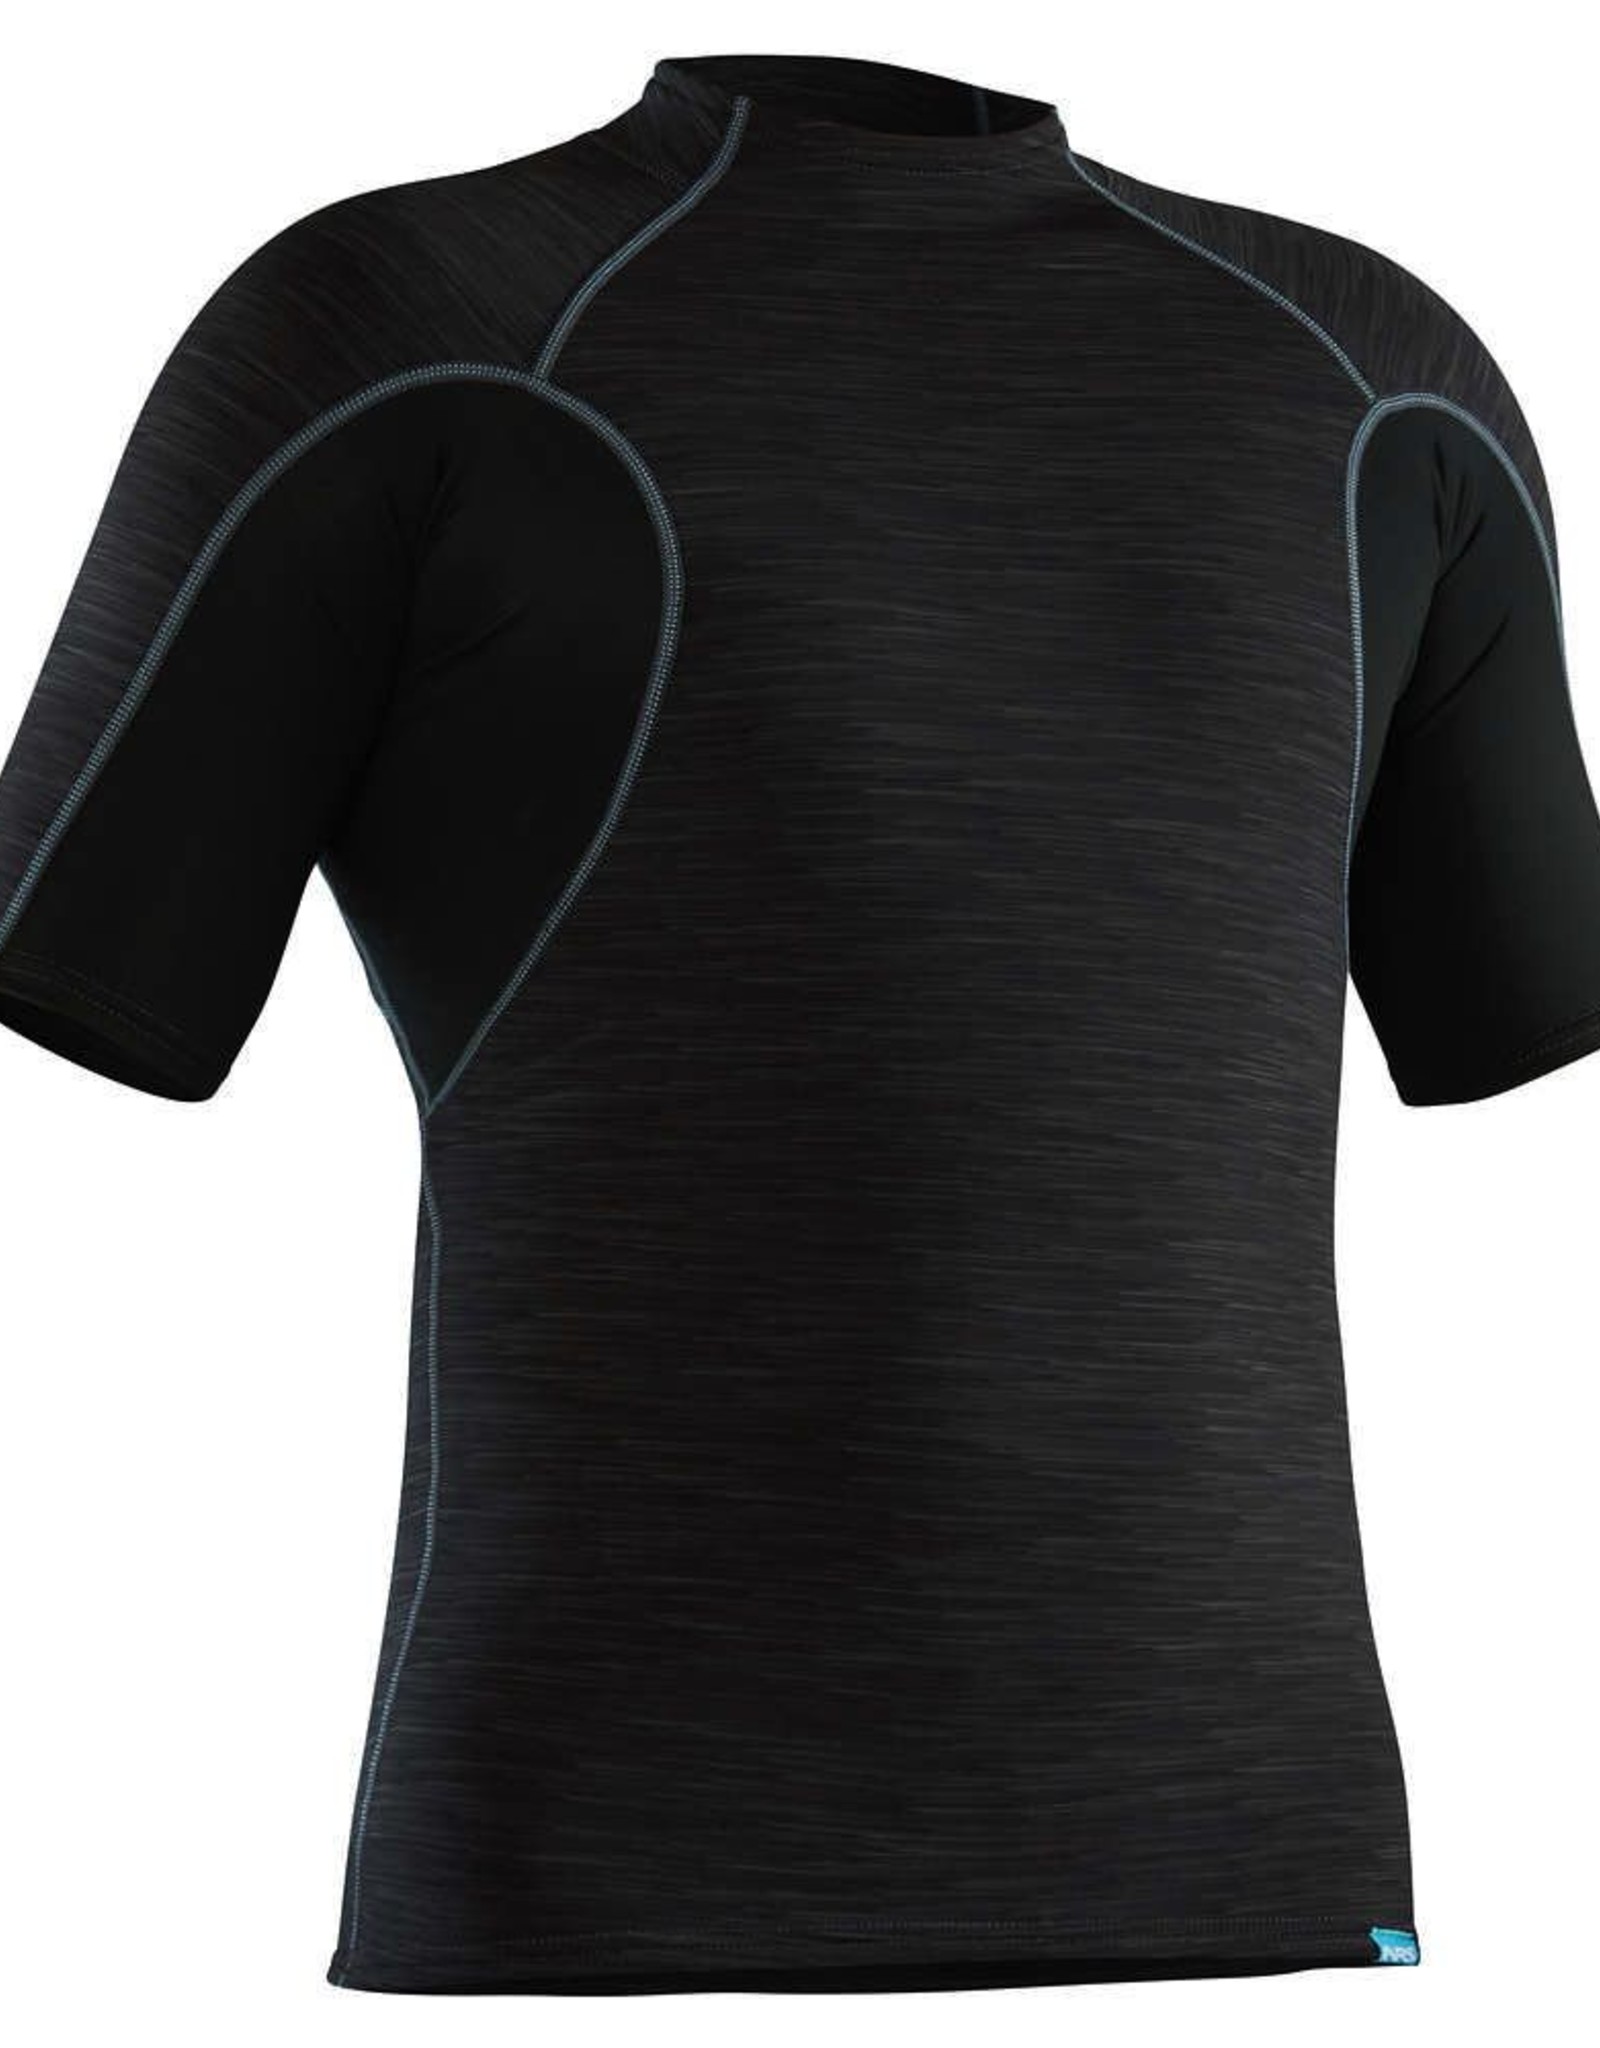 NRS Men's HydroSkin 0.5 Short Sleeve Shirt